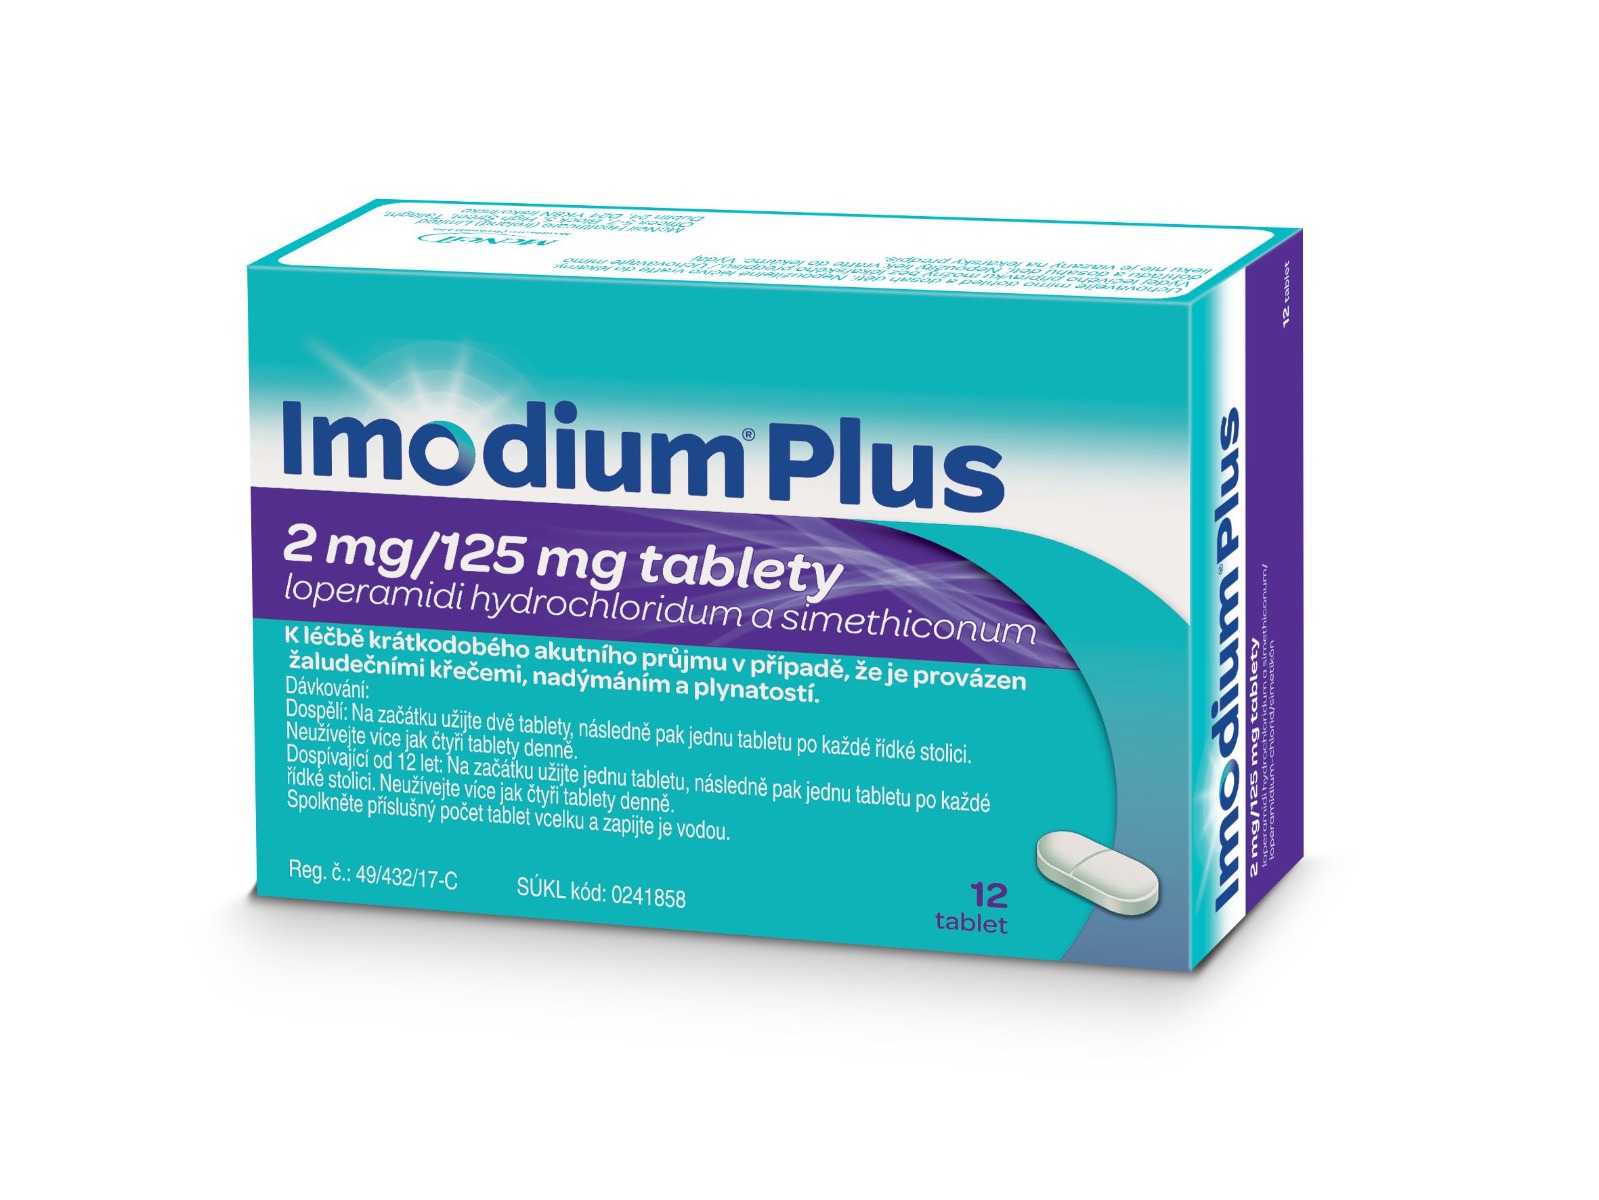 Imodium Plus 2 mg/125 mg 12 tablet Imodium